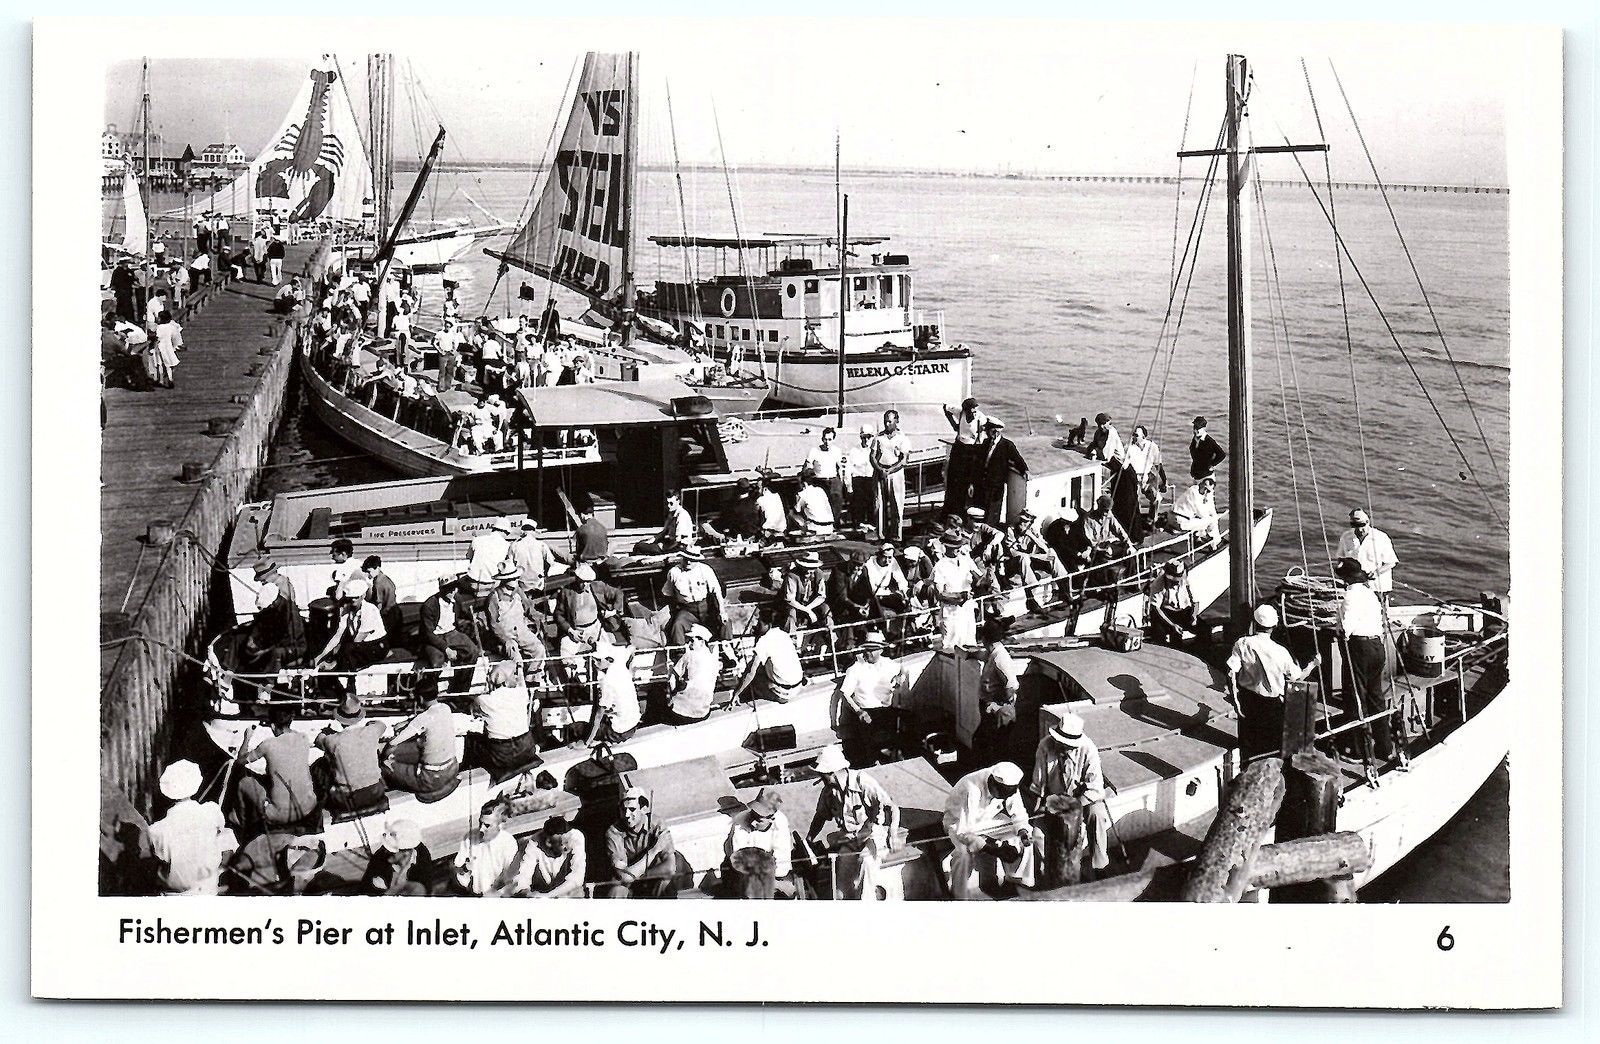 Atlantic City - Fishermens Pier at The Inlet